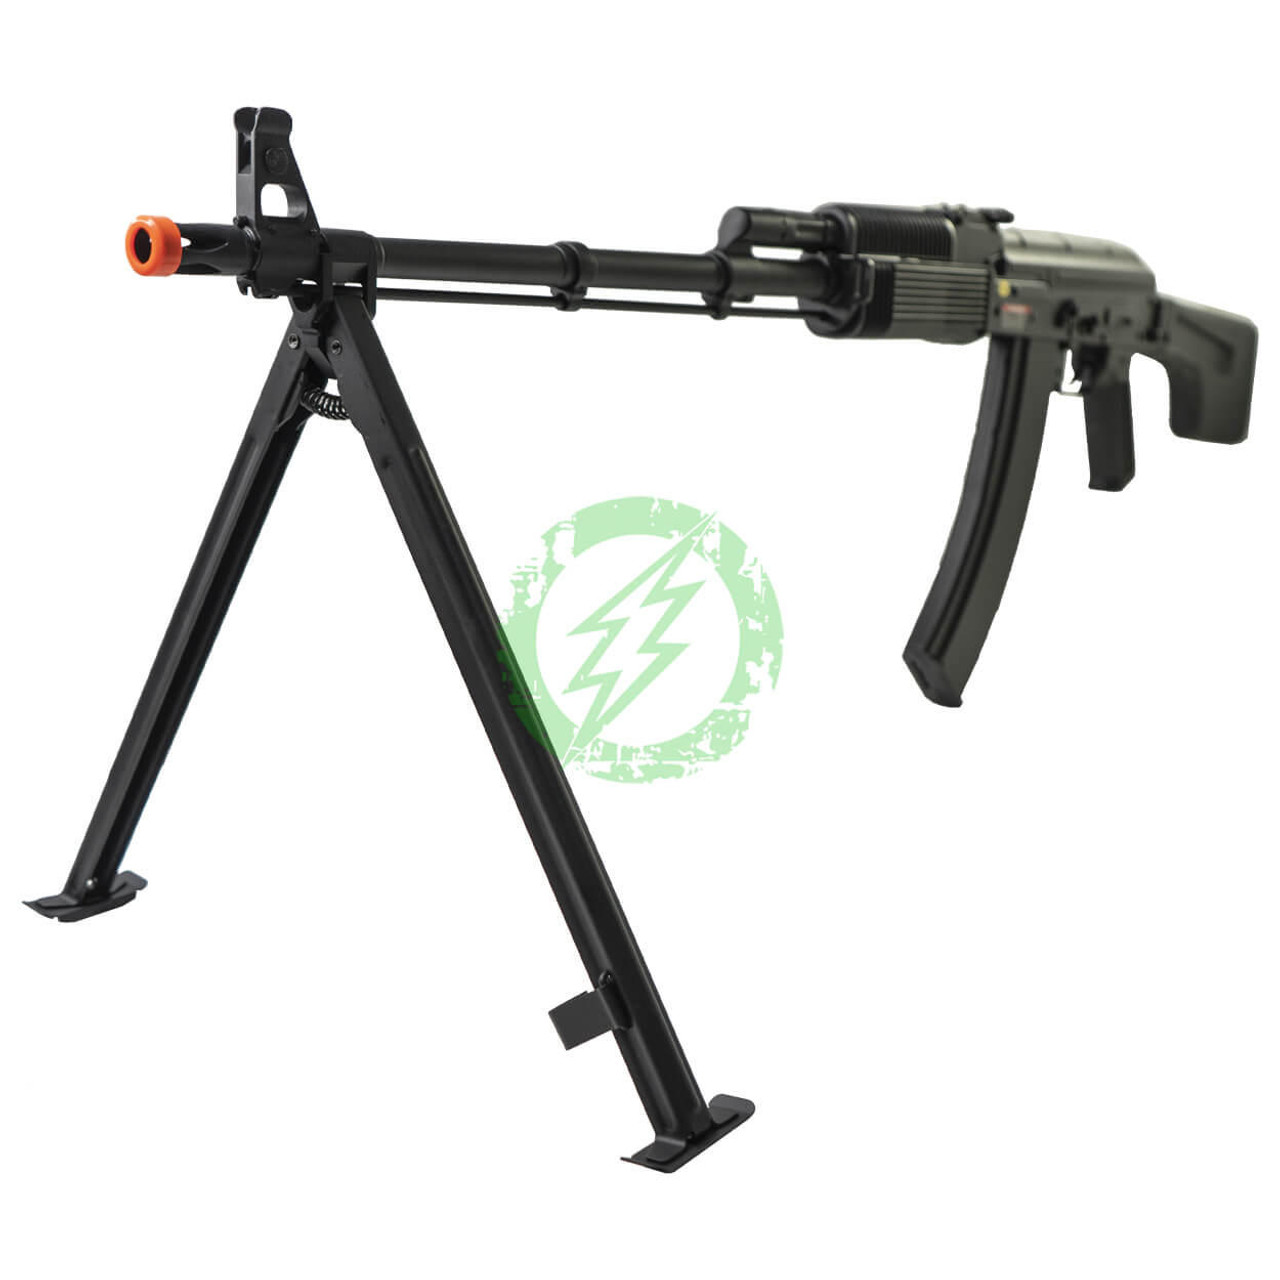  CYMA Standard RPK LMG Airsoft AEG Rifle with Steel Bipod and Polymer Folding Stock 